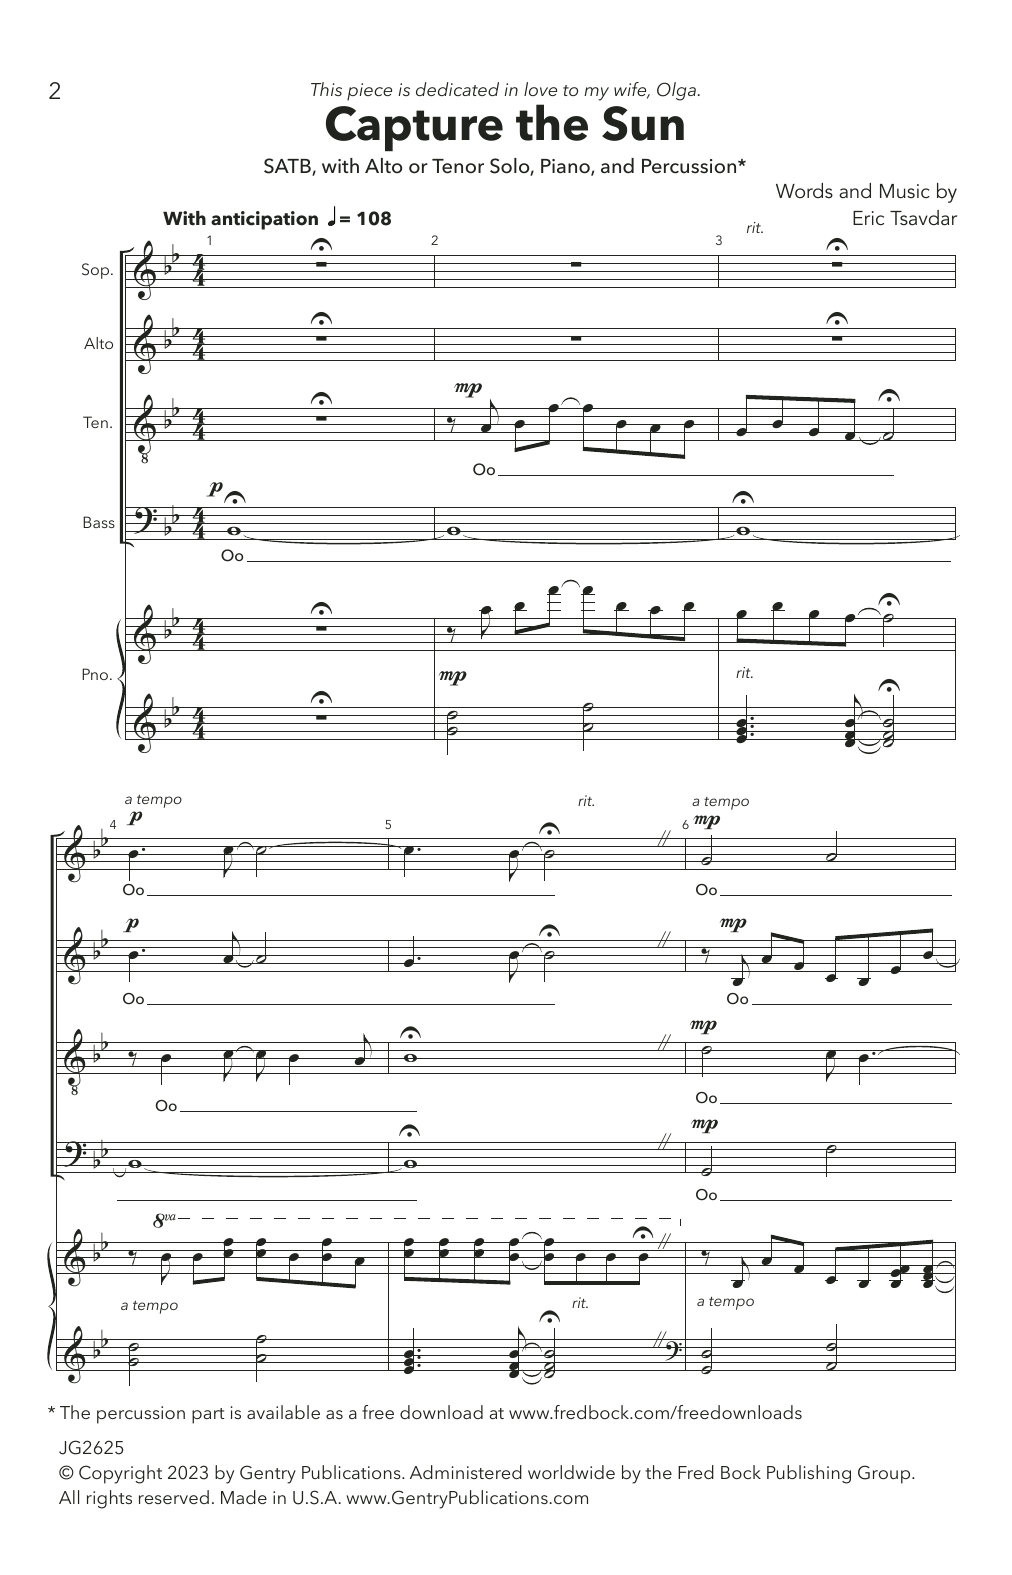 Eric Tsavdar Capture The Sun Sheet Music Notes & Chords for SATB Choir - Download or Print PDF